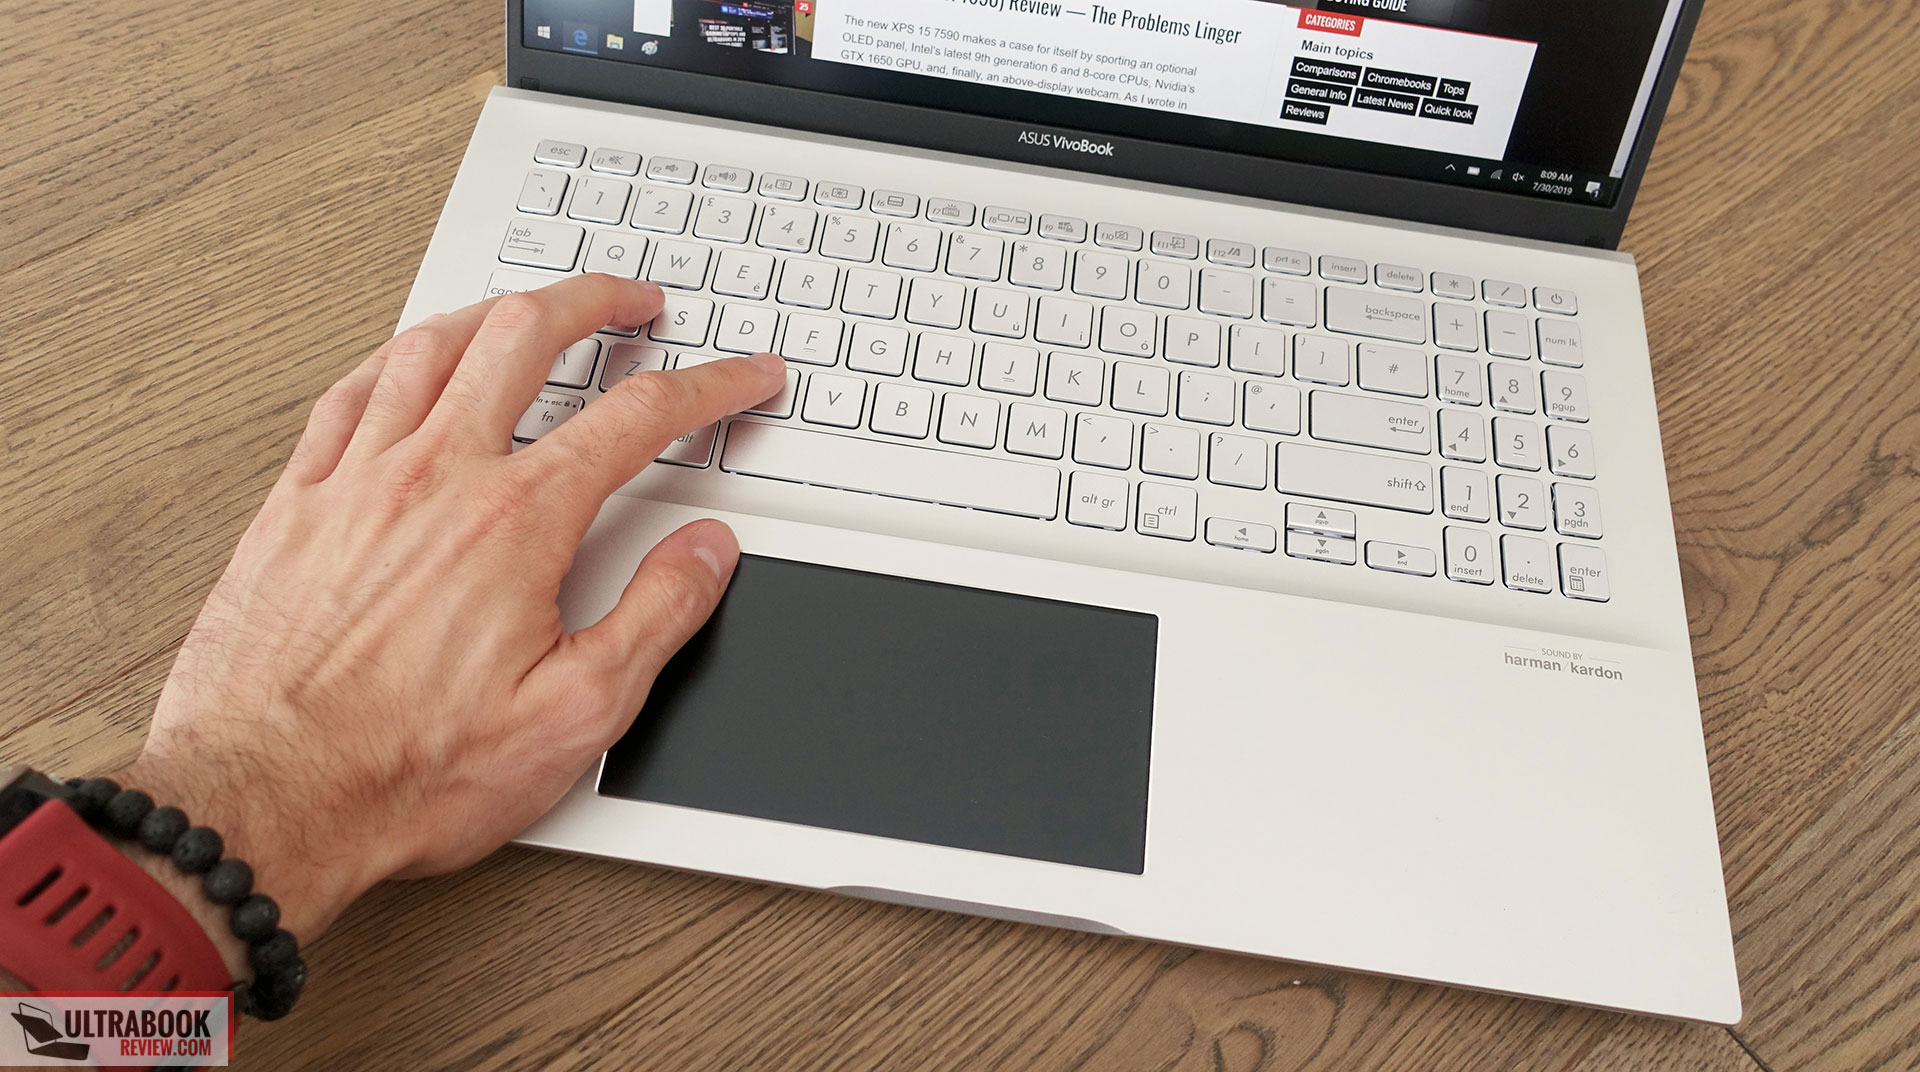 Asus ZenBook S15 S532FL - keyboard and ScreenPad